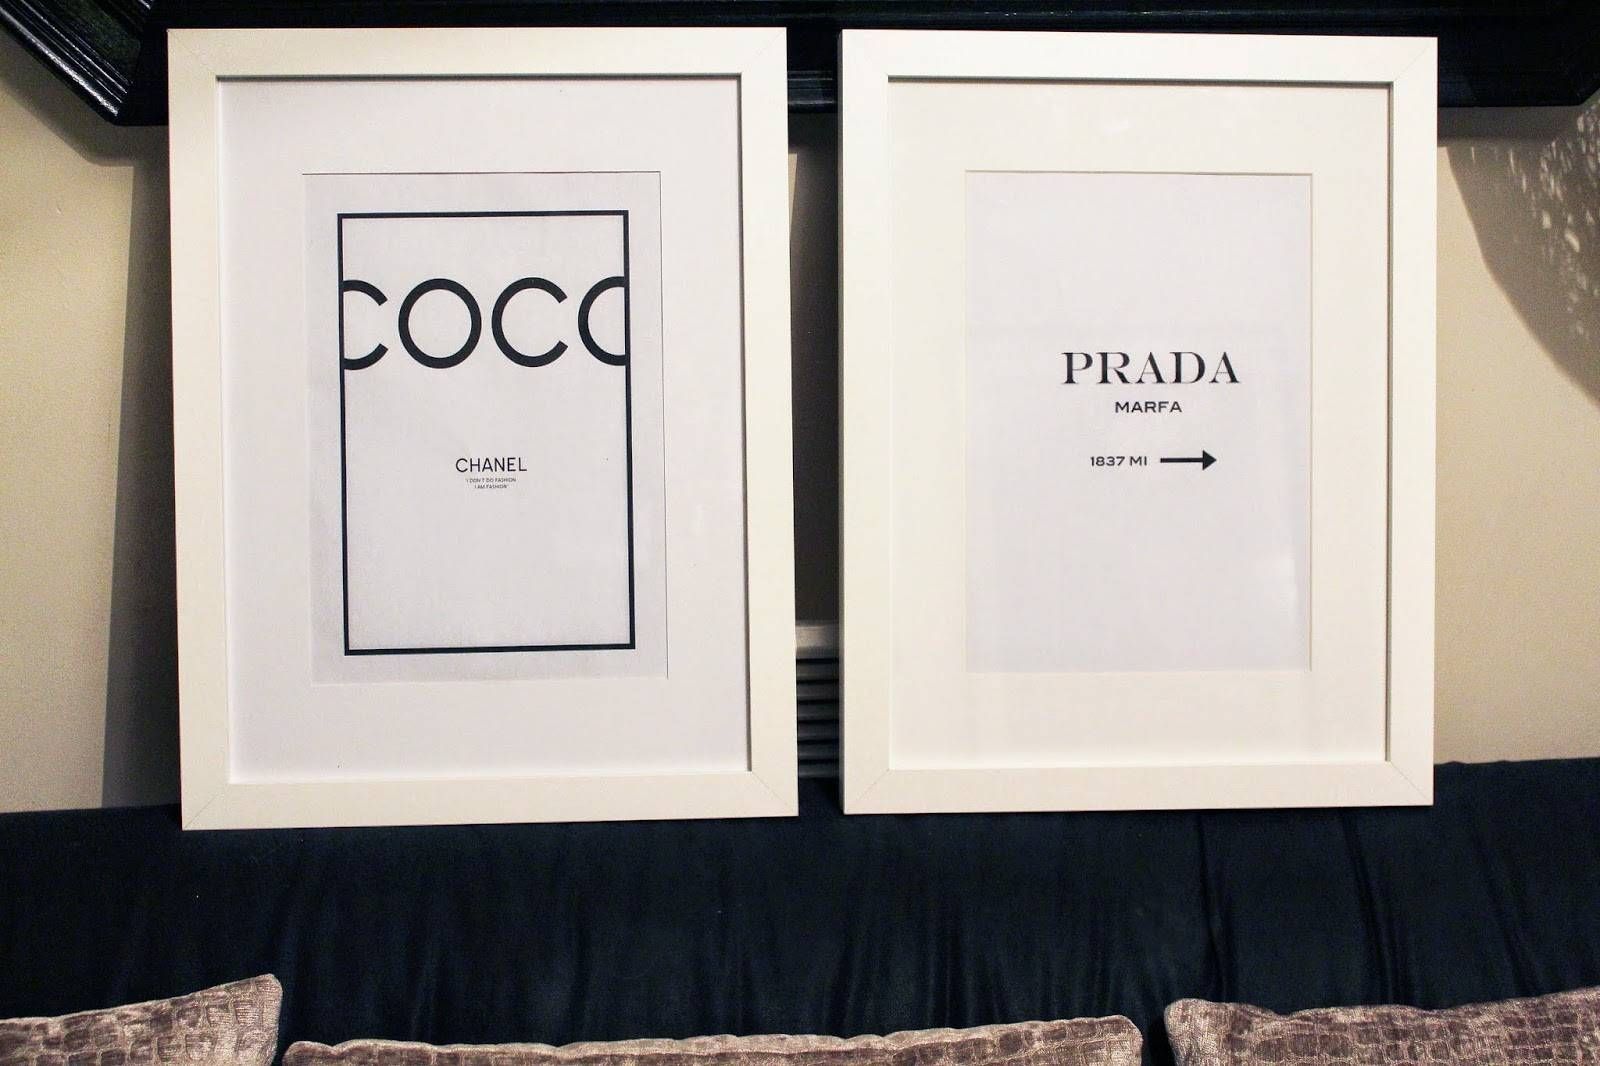 Diy Chanel | Prada Wall Art | Batb Inside Best And Newest Prada Wall Art (View 25 of 25)